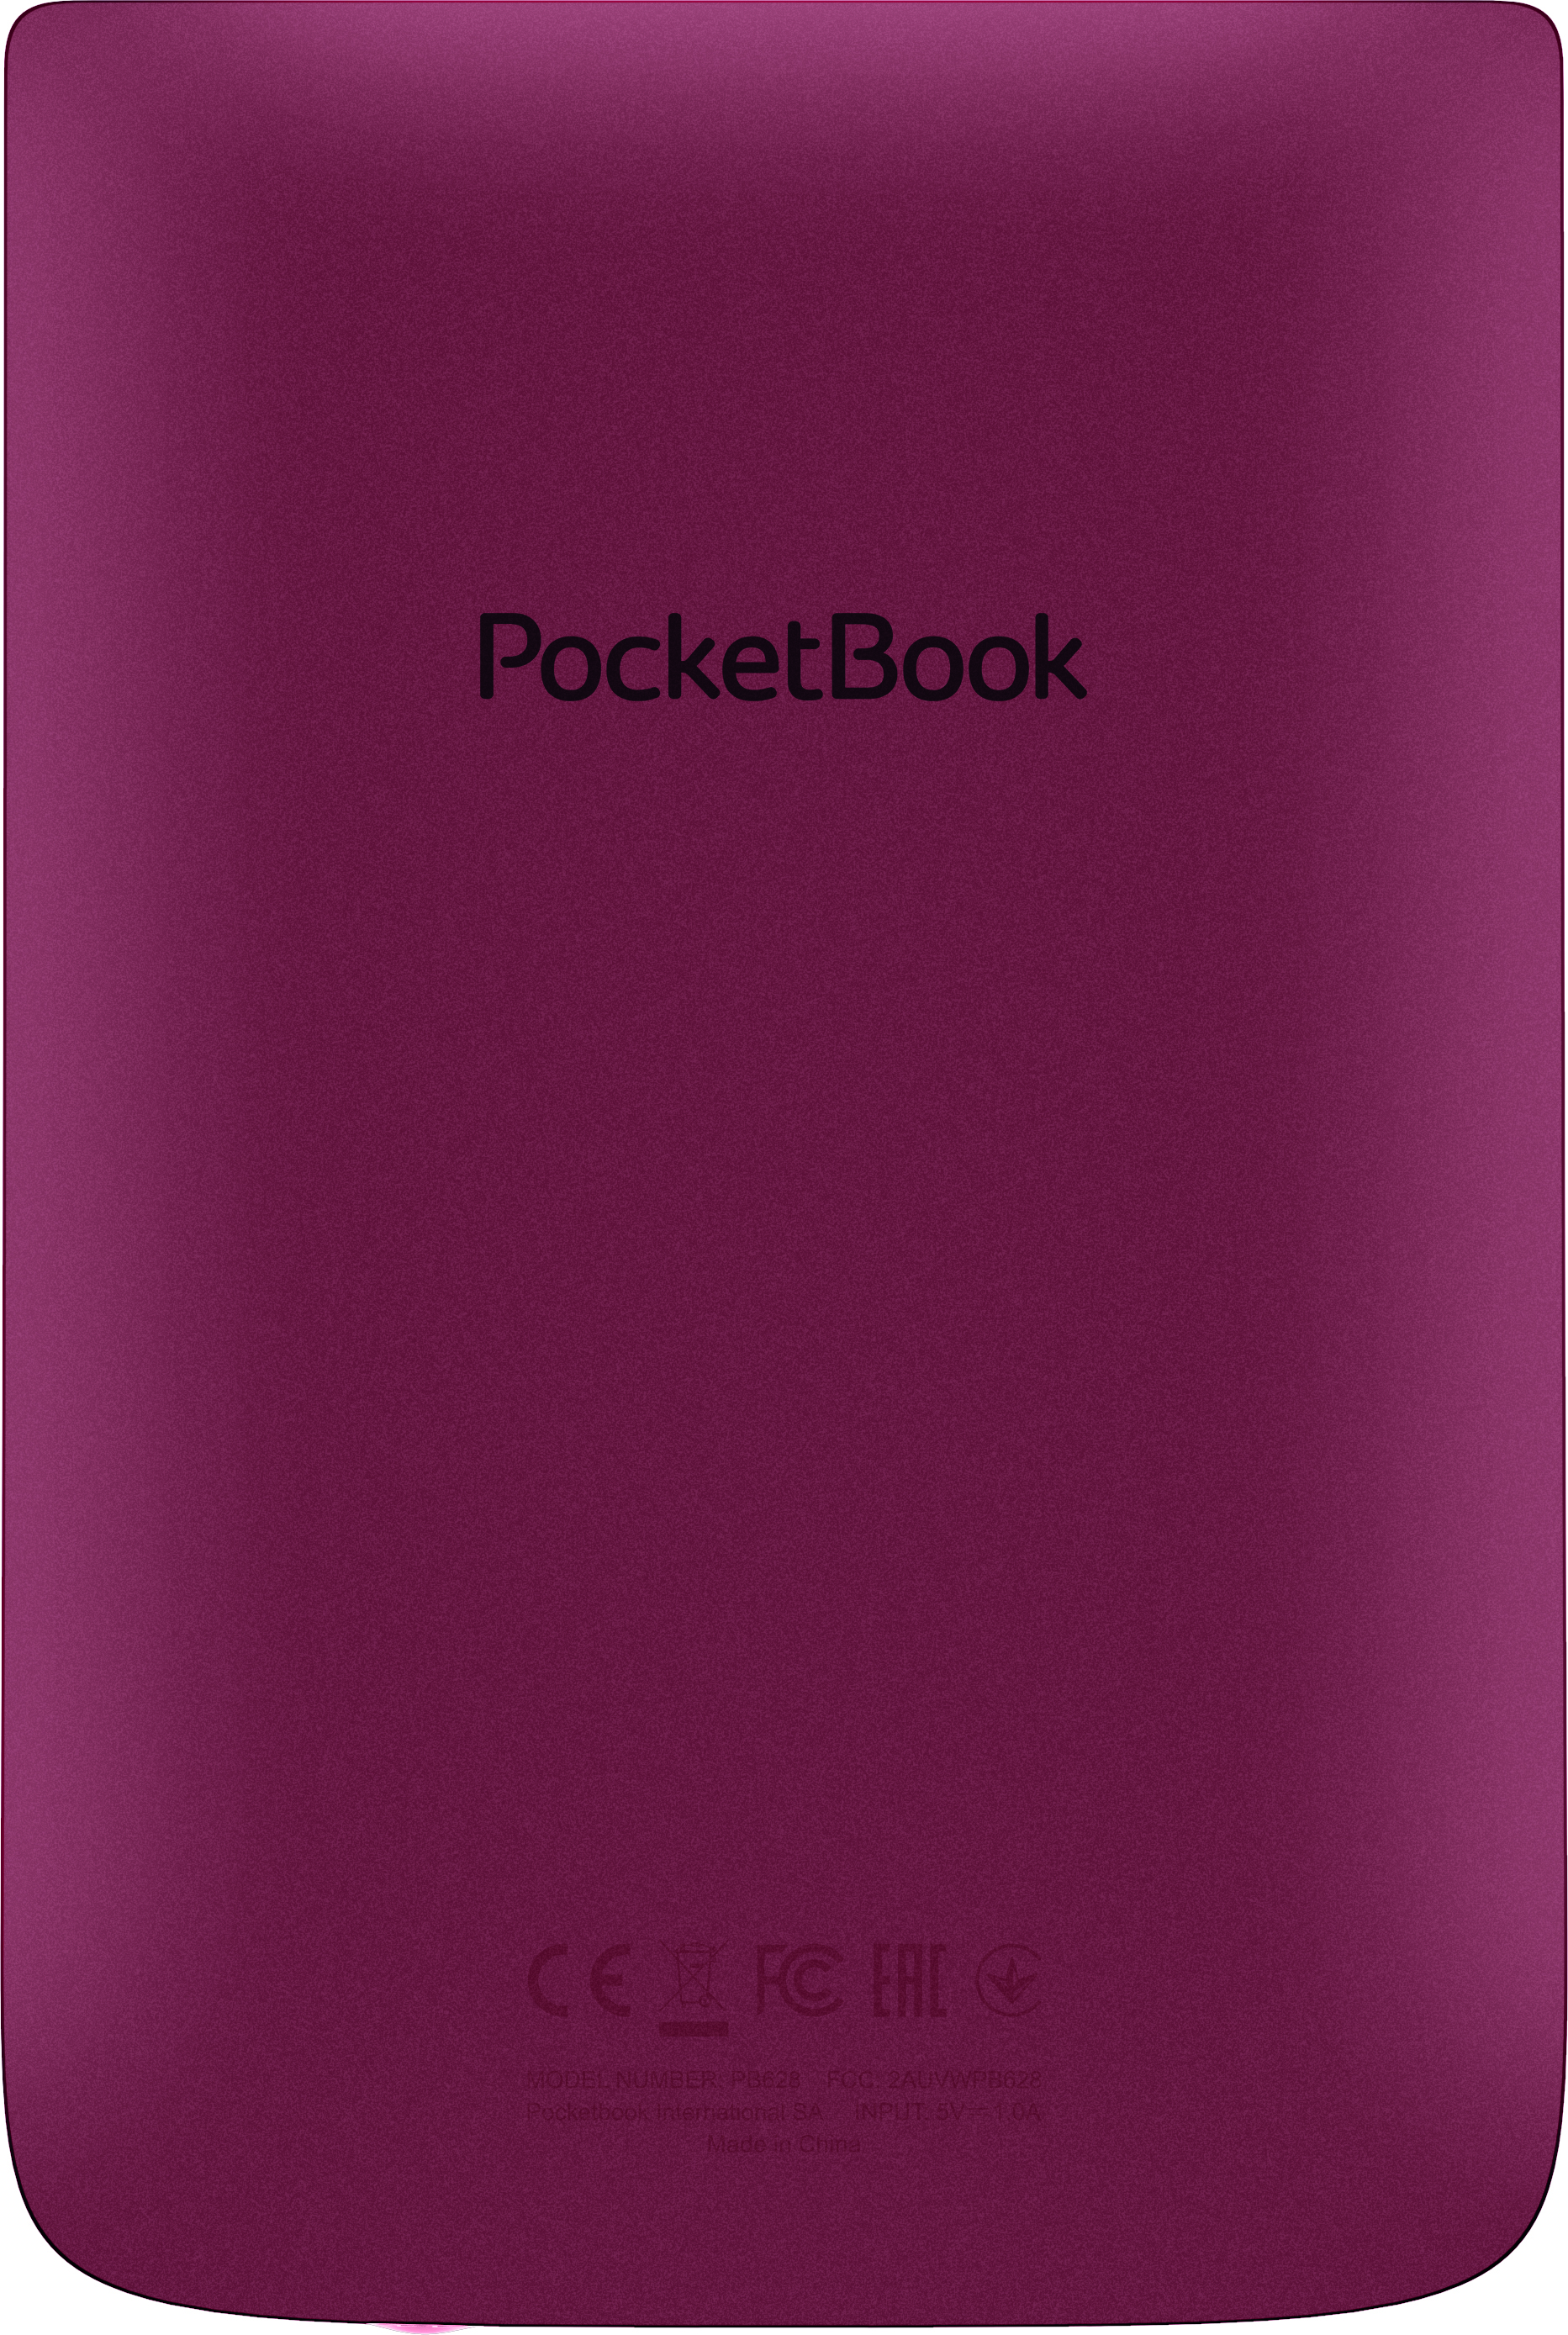 POCKETBOOK Touch Lux eReader 6\